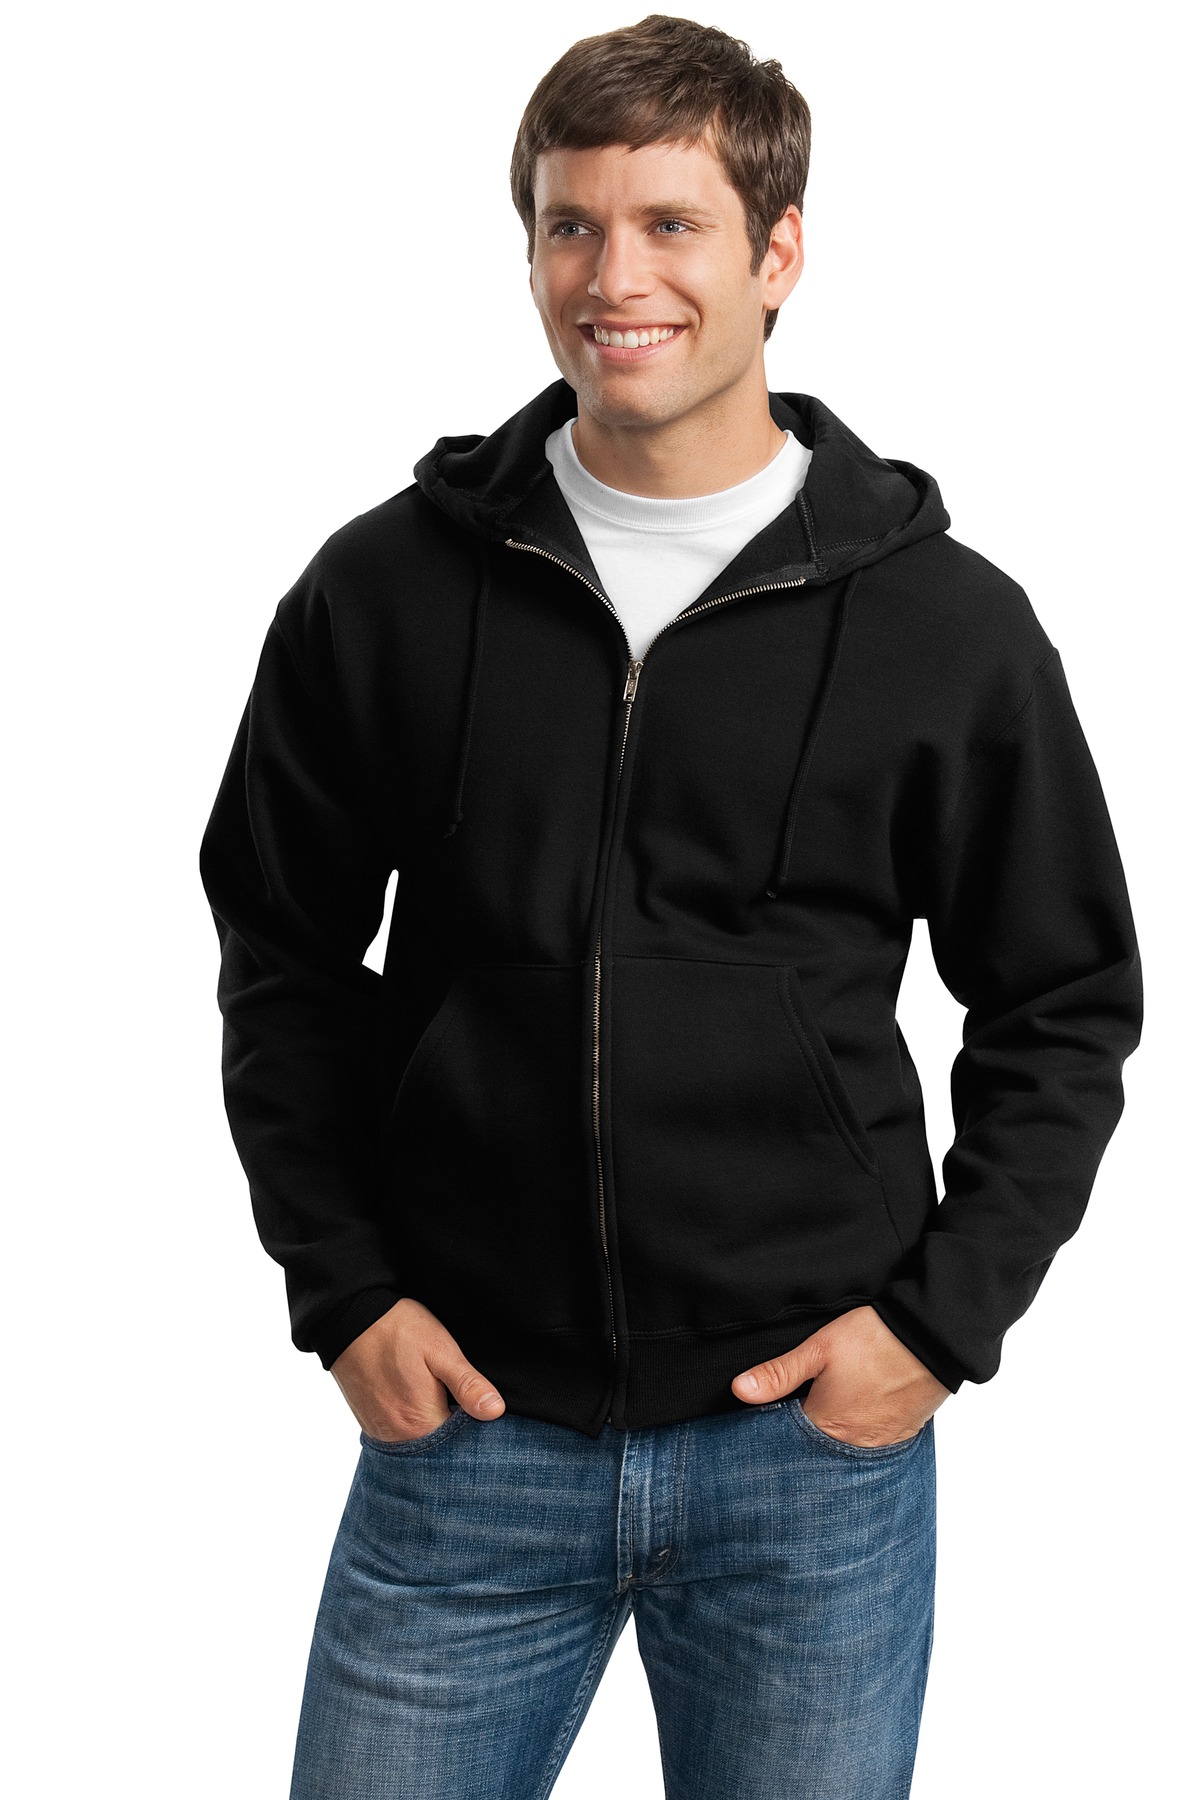 JERZEES Super Sweats NuBlend - Full-Zip Hooded Sweatshirt....